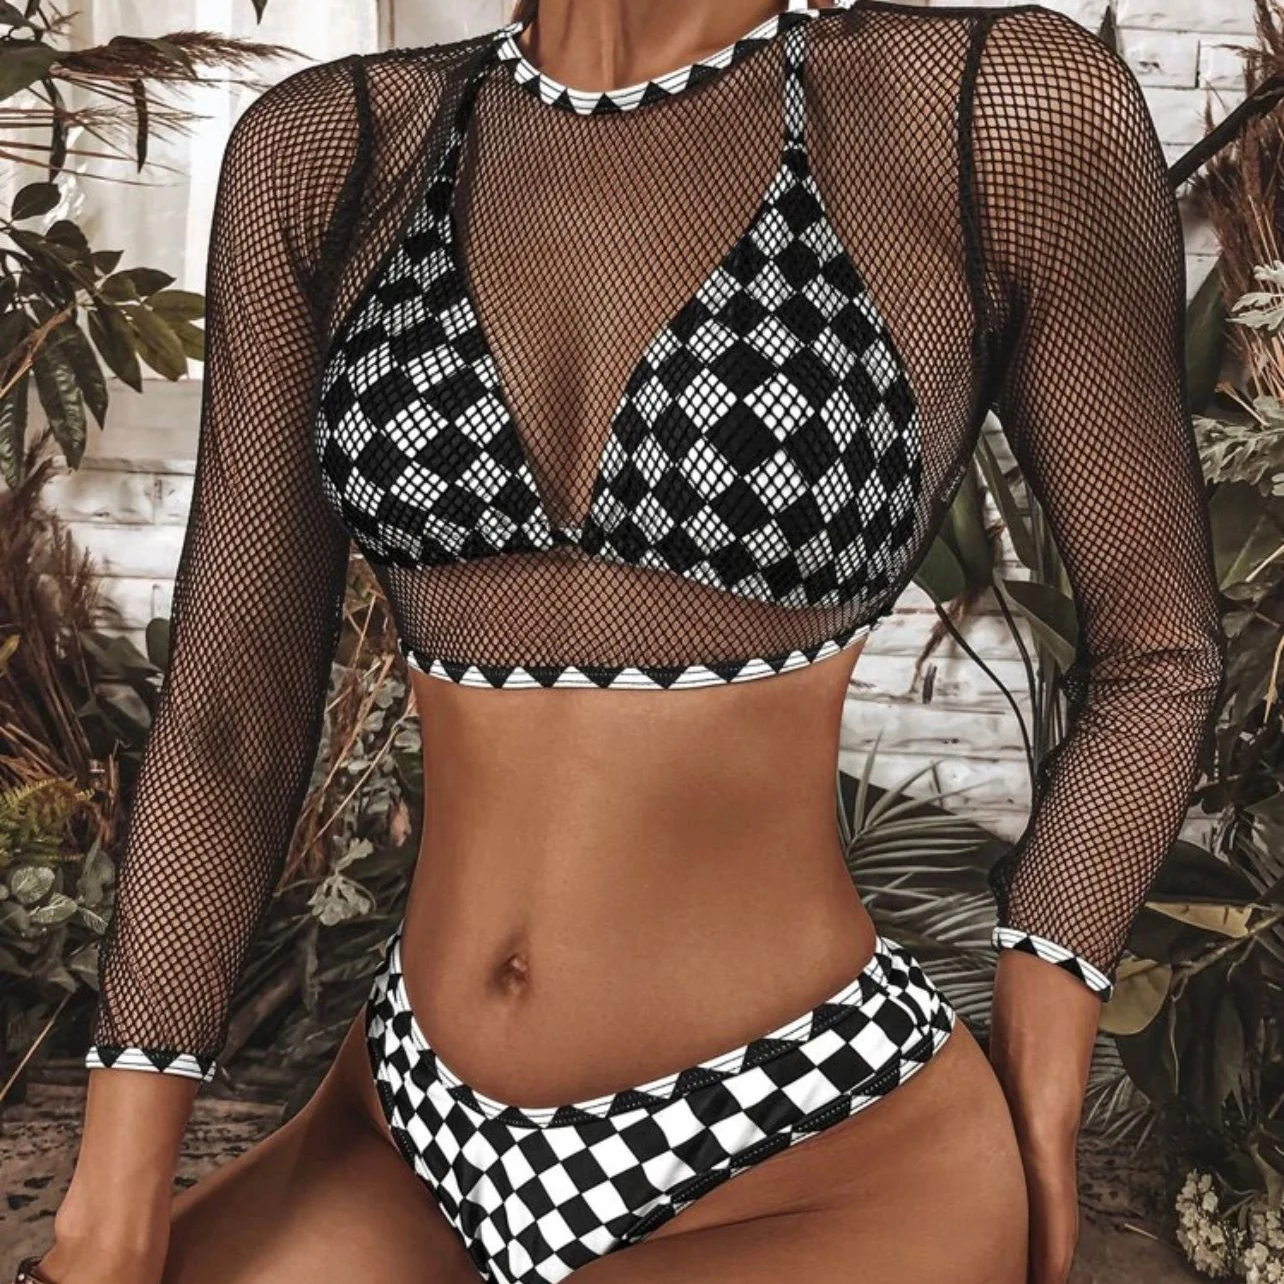 

2022 Women's Ladies Black White Gingham Swimsuit 3 Pieces Bikini Set Beach Swimwear Bathing Suit, Picture showed